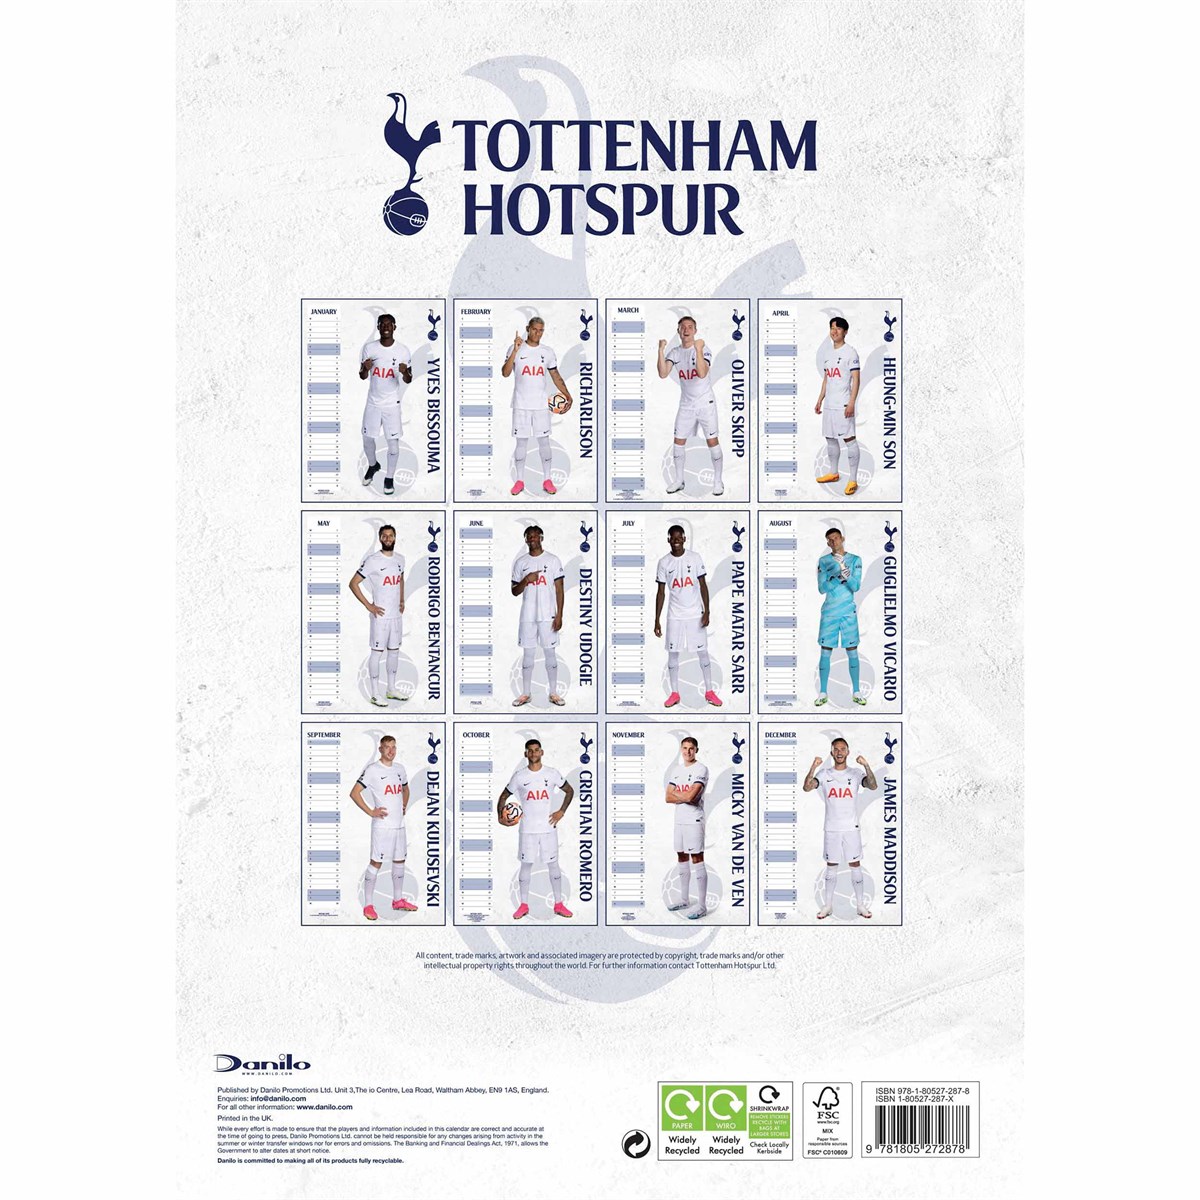 The Official Tottenham Hotspur FC Calendar 2021